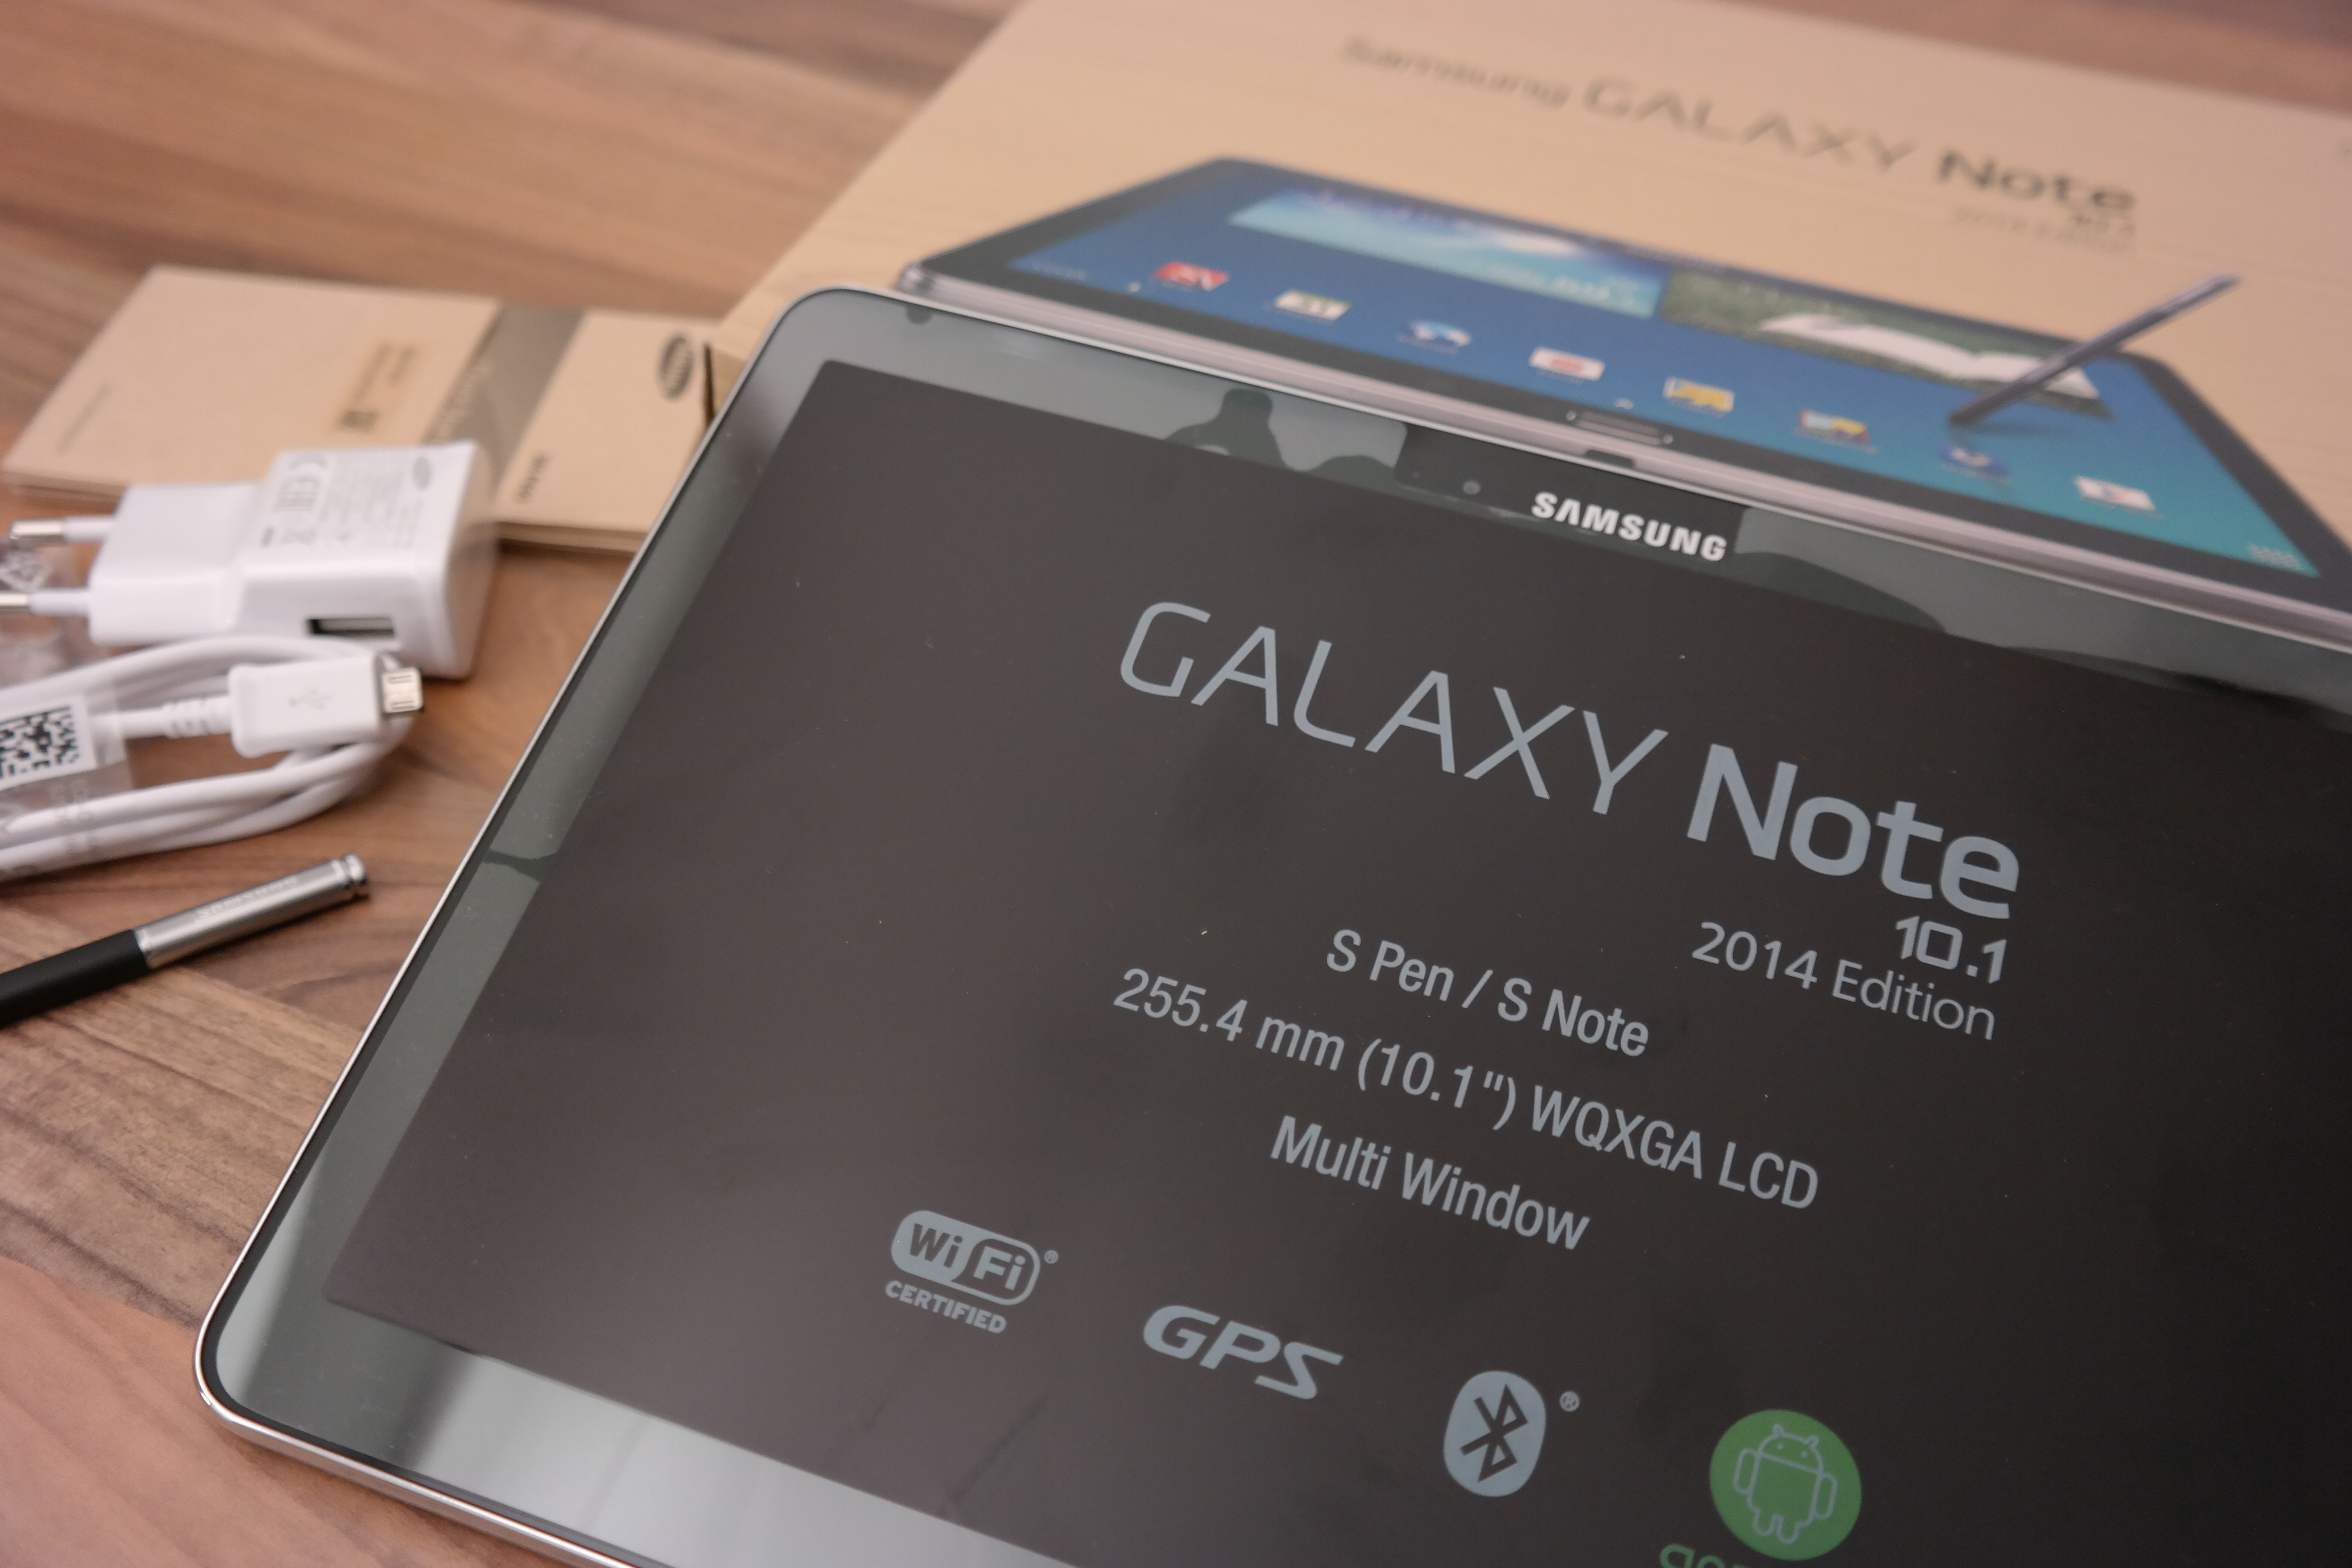 Galaxy note 2014. Samsung Galaxy Note 10.1 2014 Edition. Samsung Galaxy Note 10.1 2014 Edition коробка. Самсунг галакси ноут эдишн 2014.